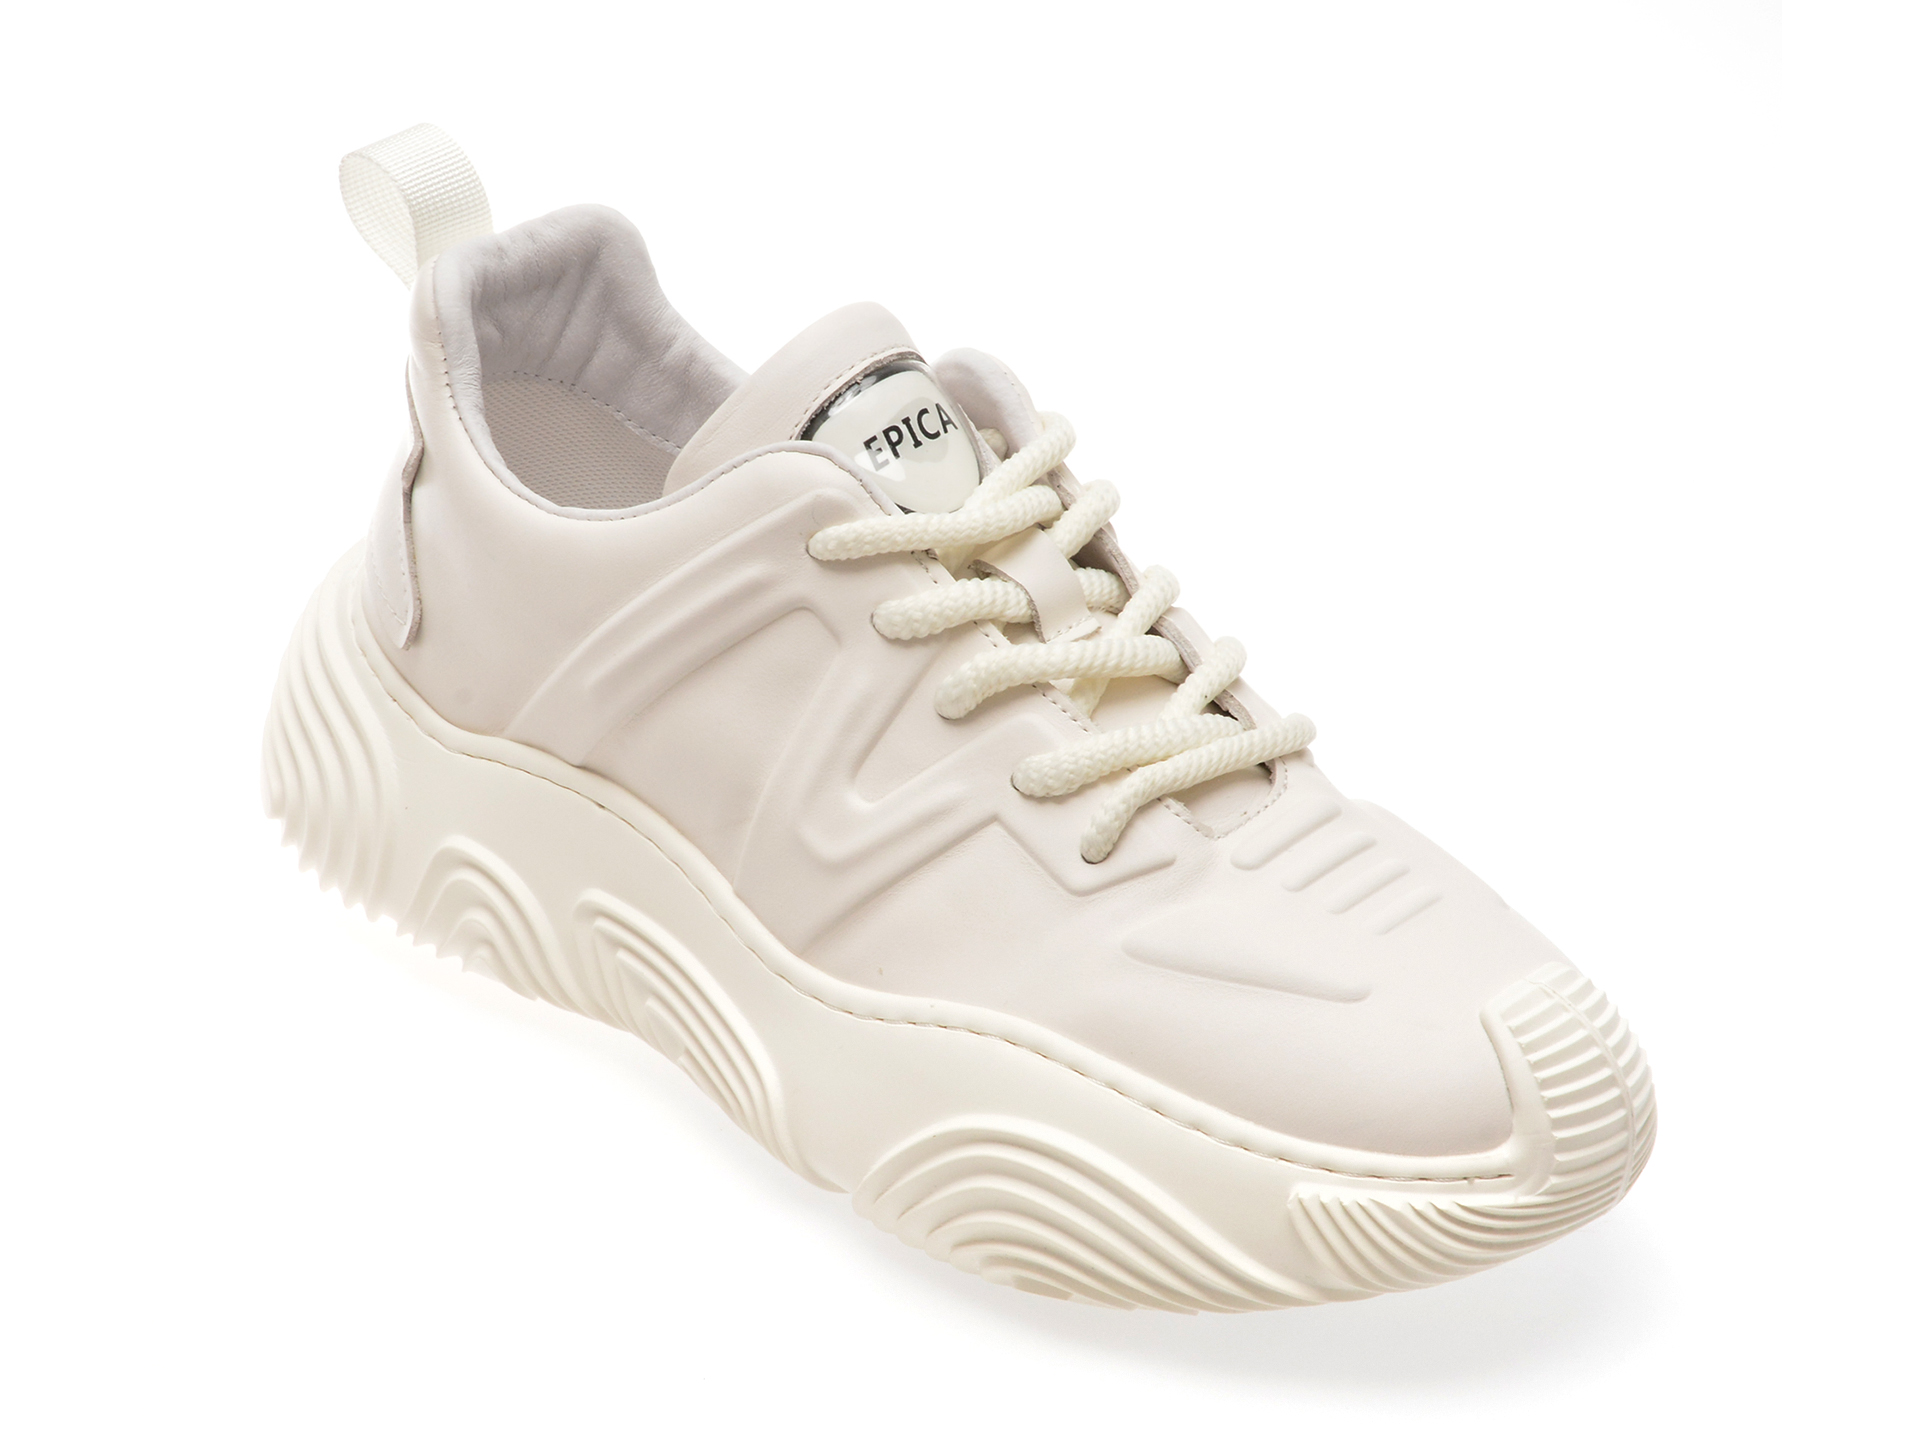 Pantofi casual EPICA albi, 3620, din piele naturala